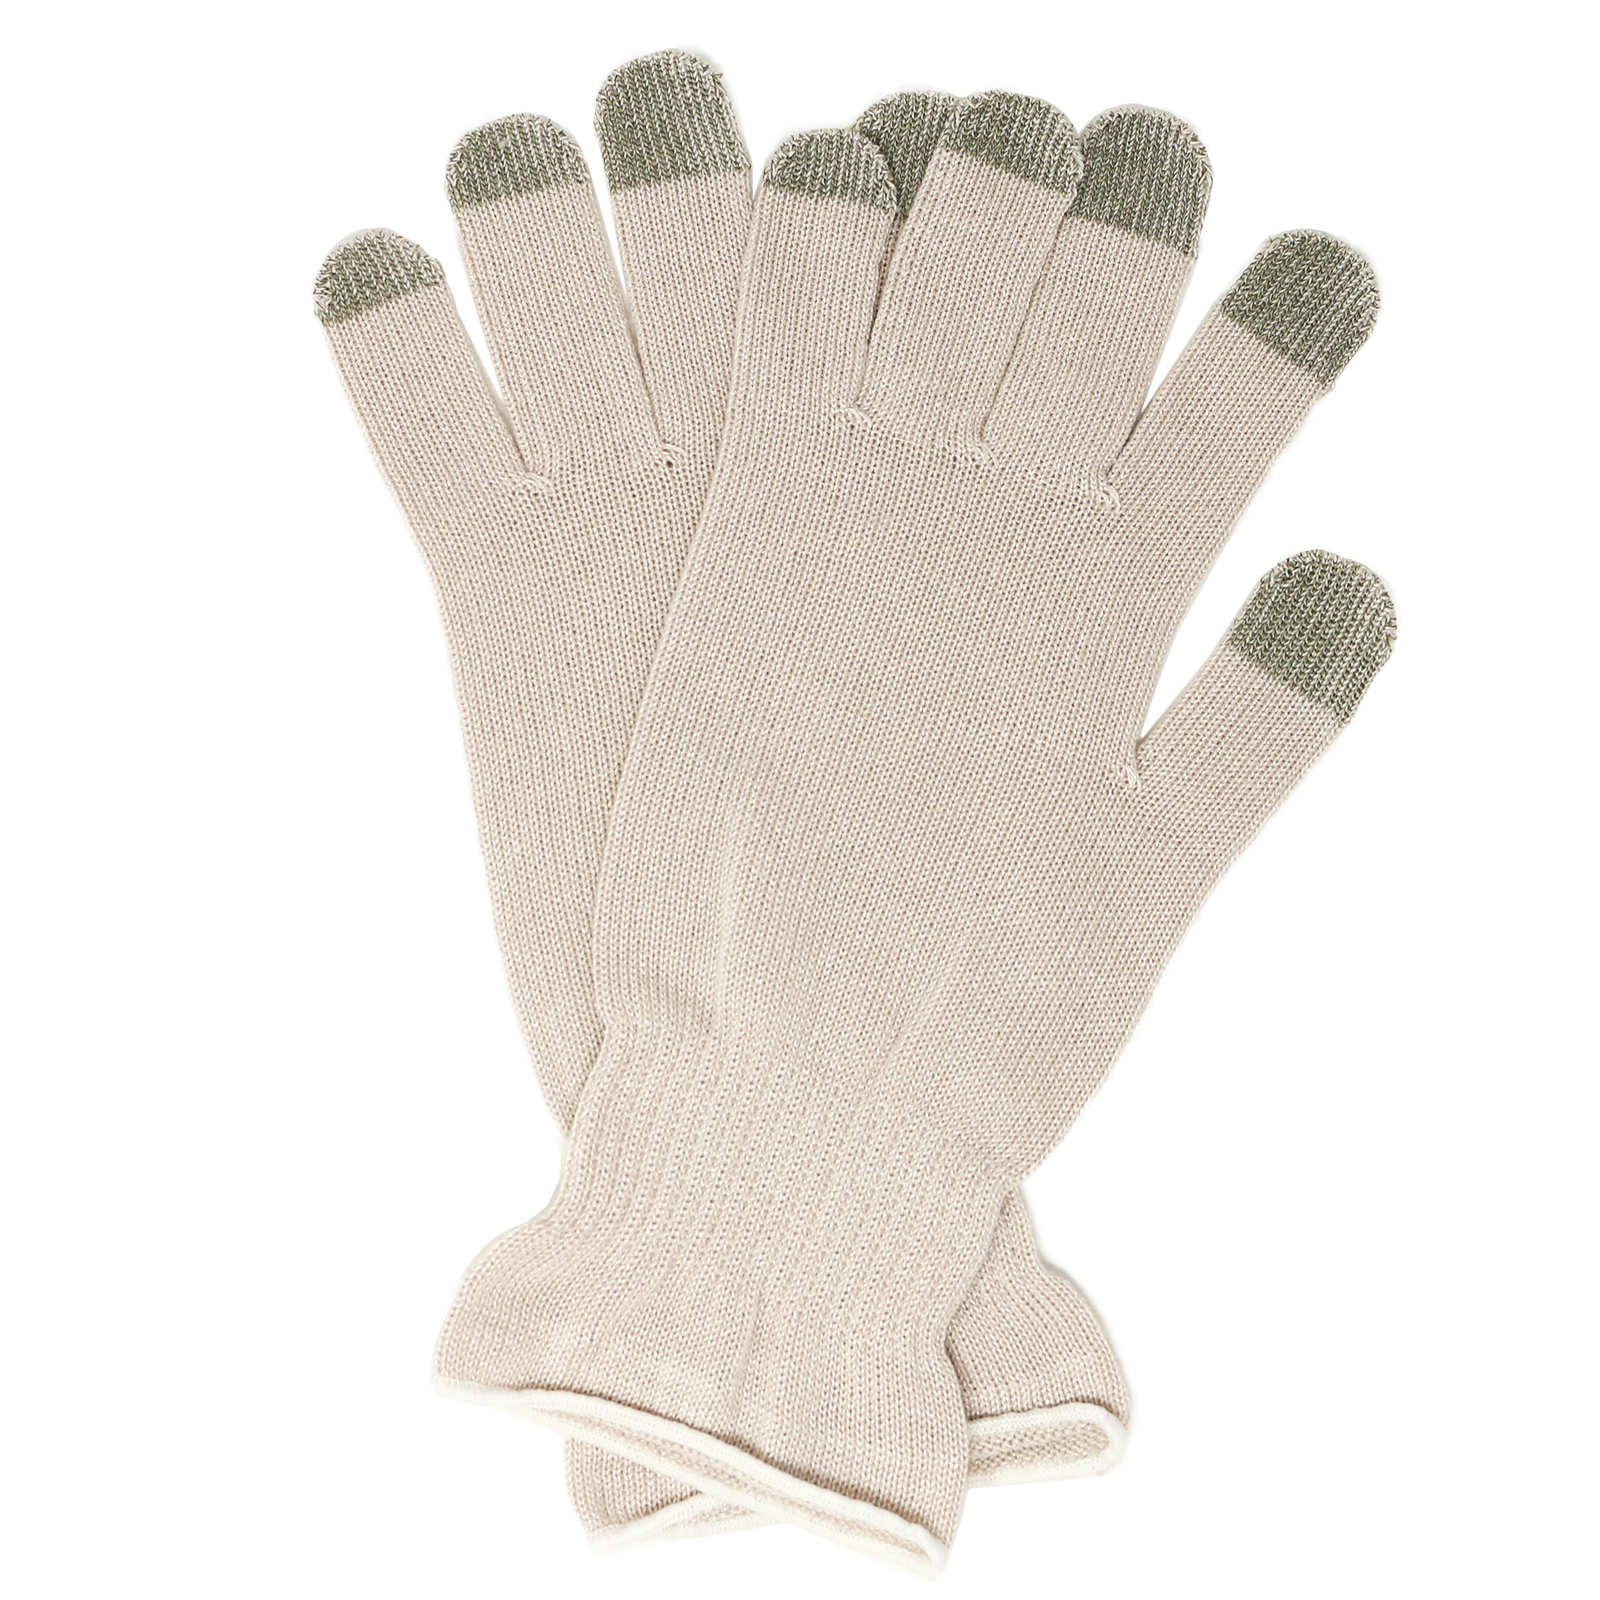 MILASIC シルク 手袋 スマホ 乾燥 保湿 日本製 潤い ナイト手袋 おやすみ手袋 スマホ対応...